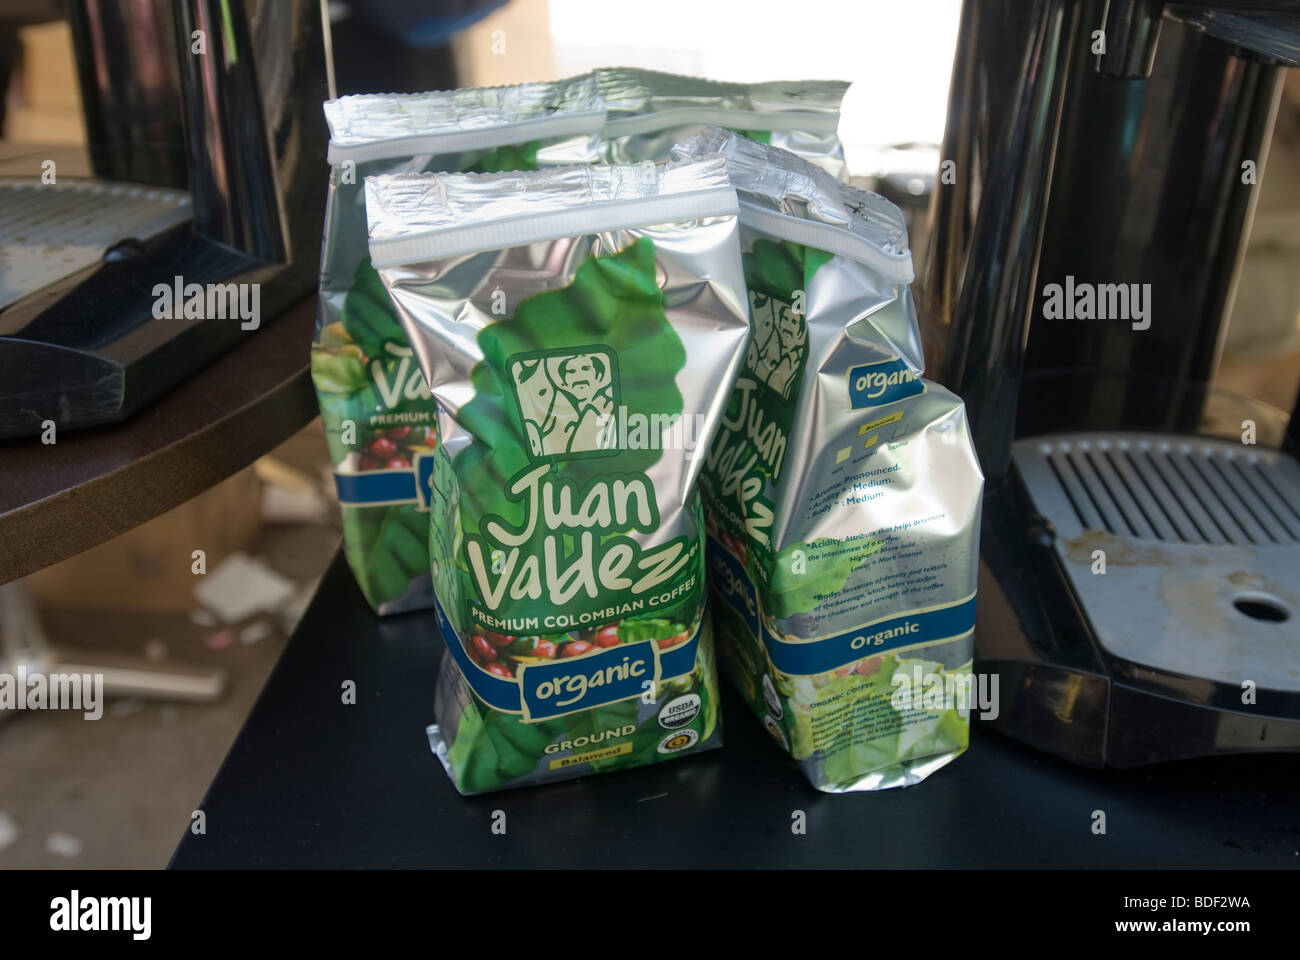 Juan Valdez coffee distributes free samples as part of their marketing promotion Stock Photo